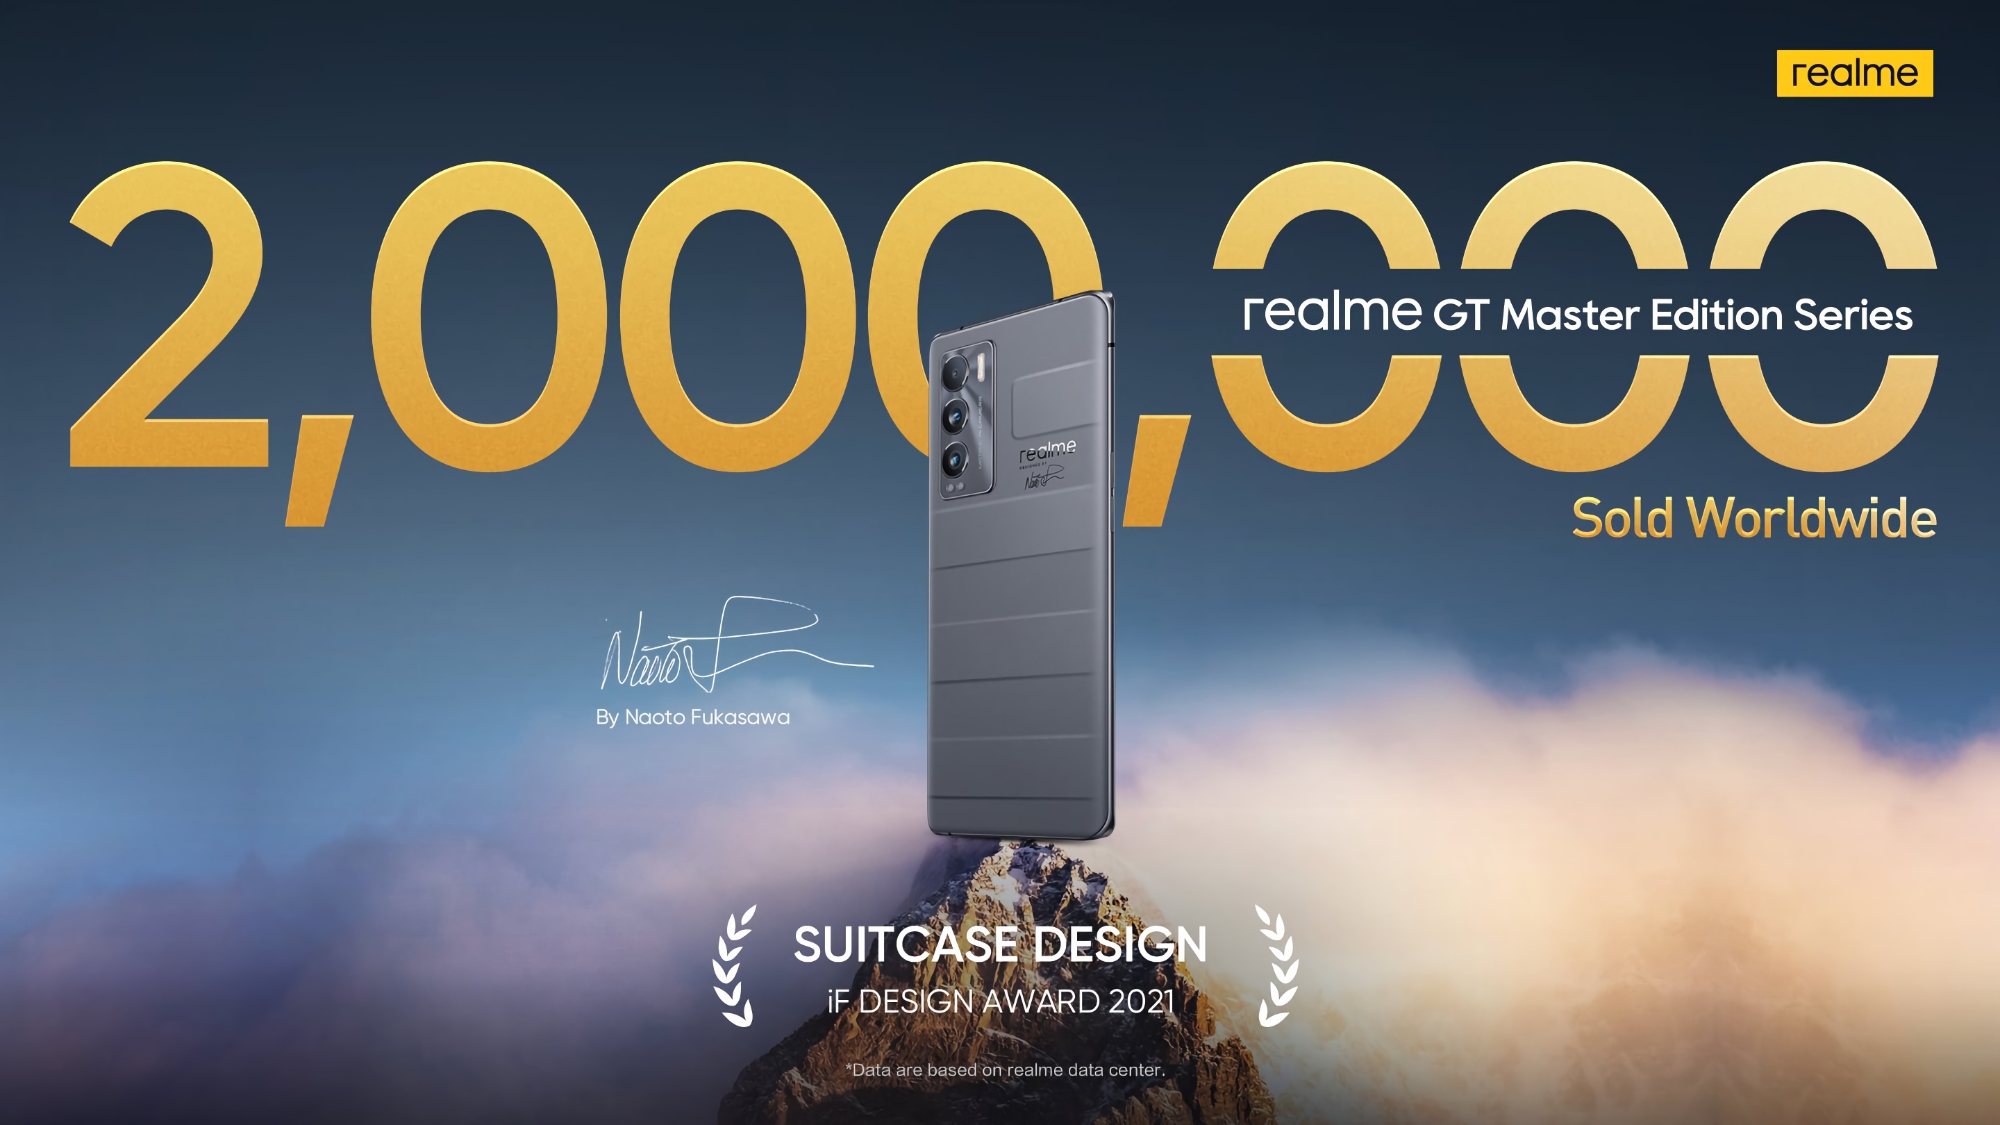 2.000.000 Geräte: realme meldet Verkäufe des realme GT Master Edition Smartphones